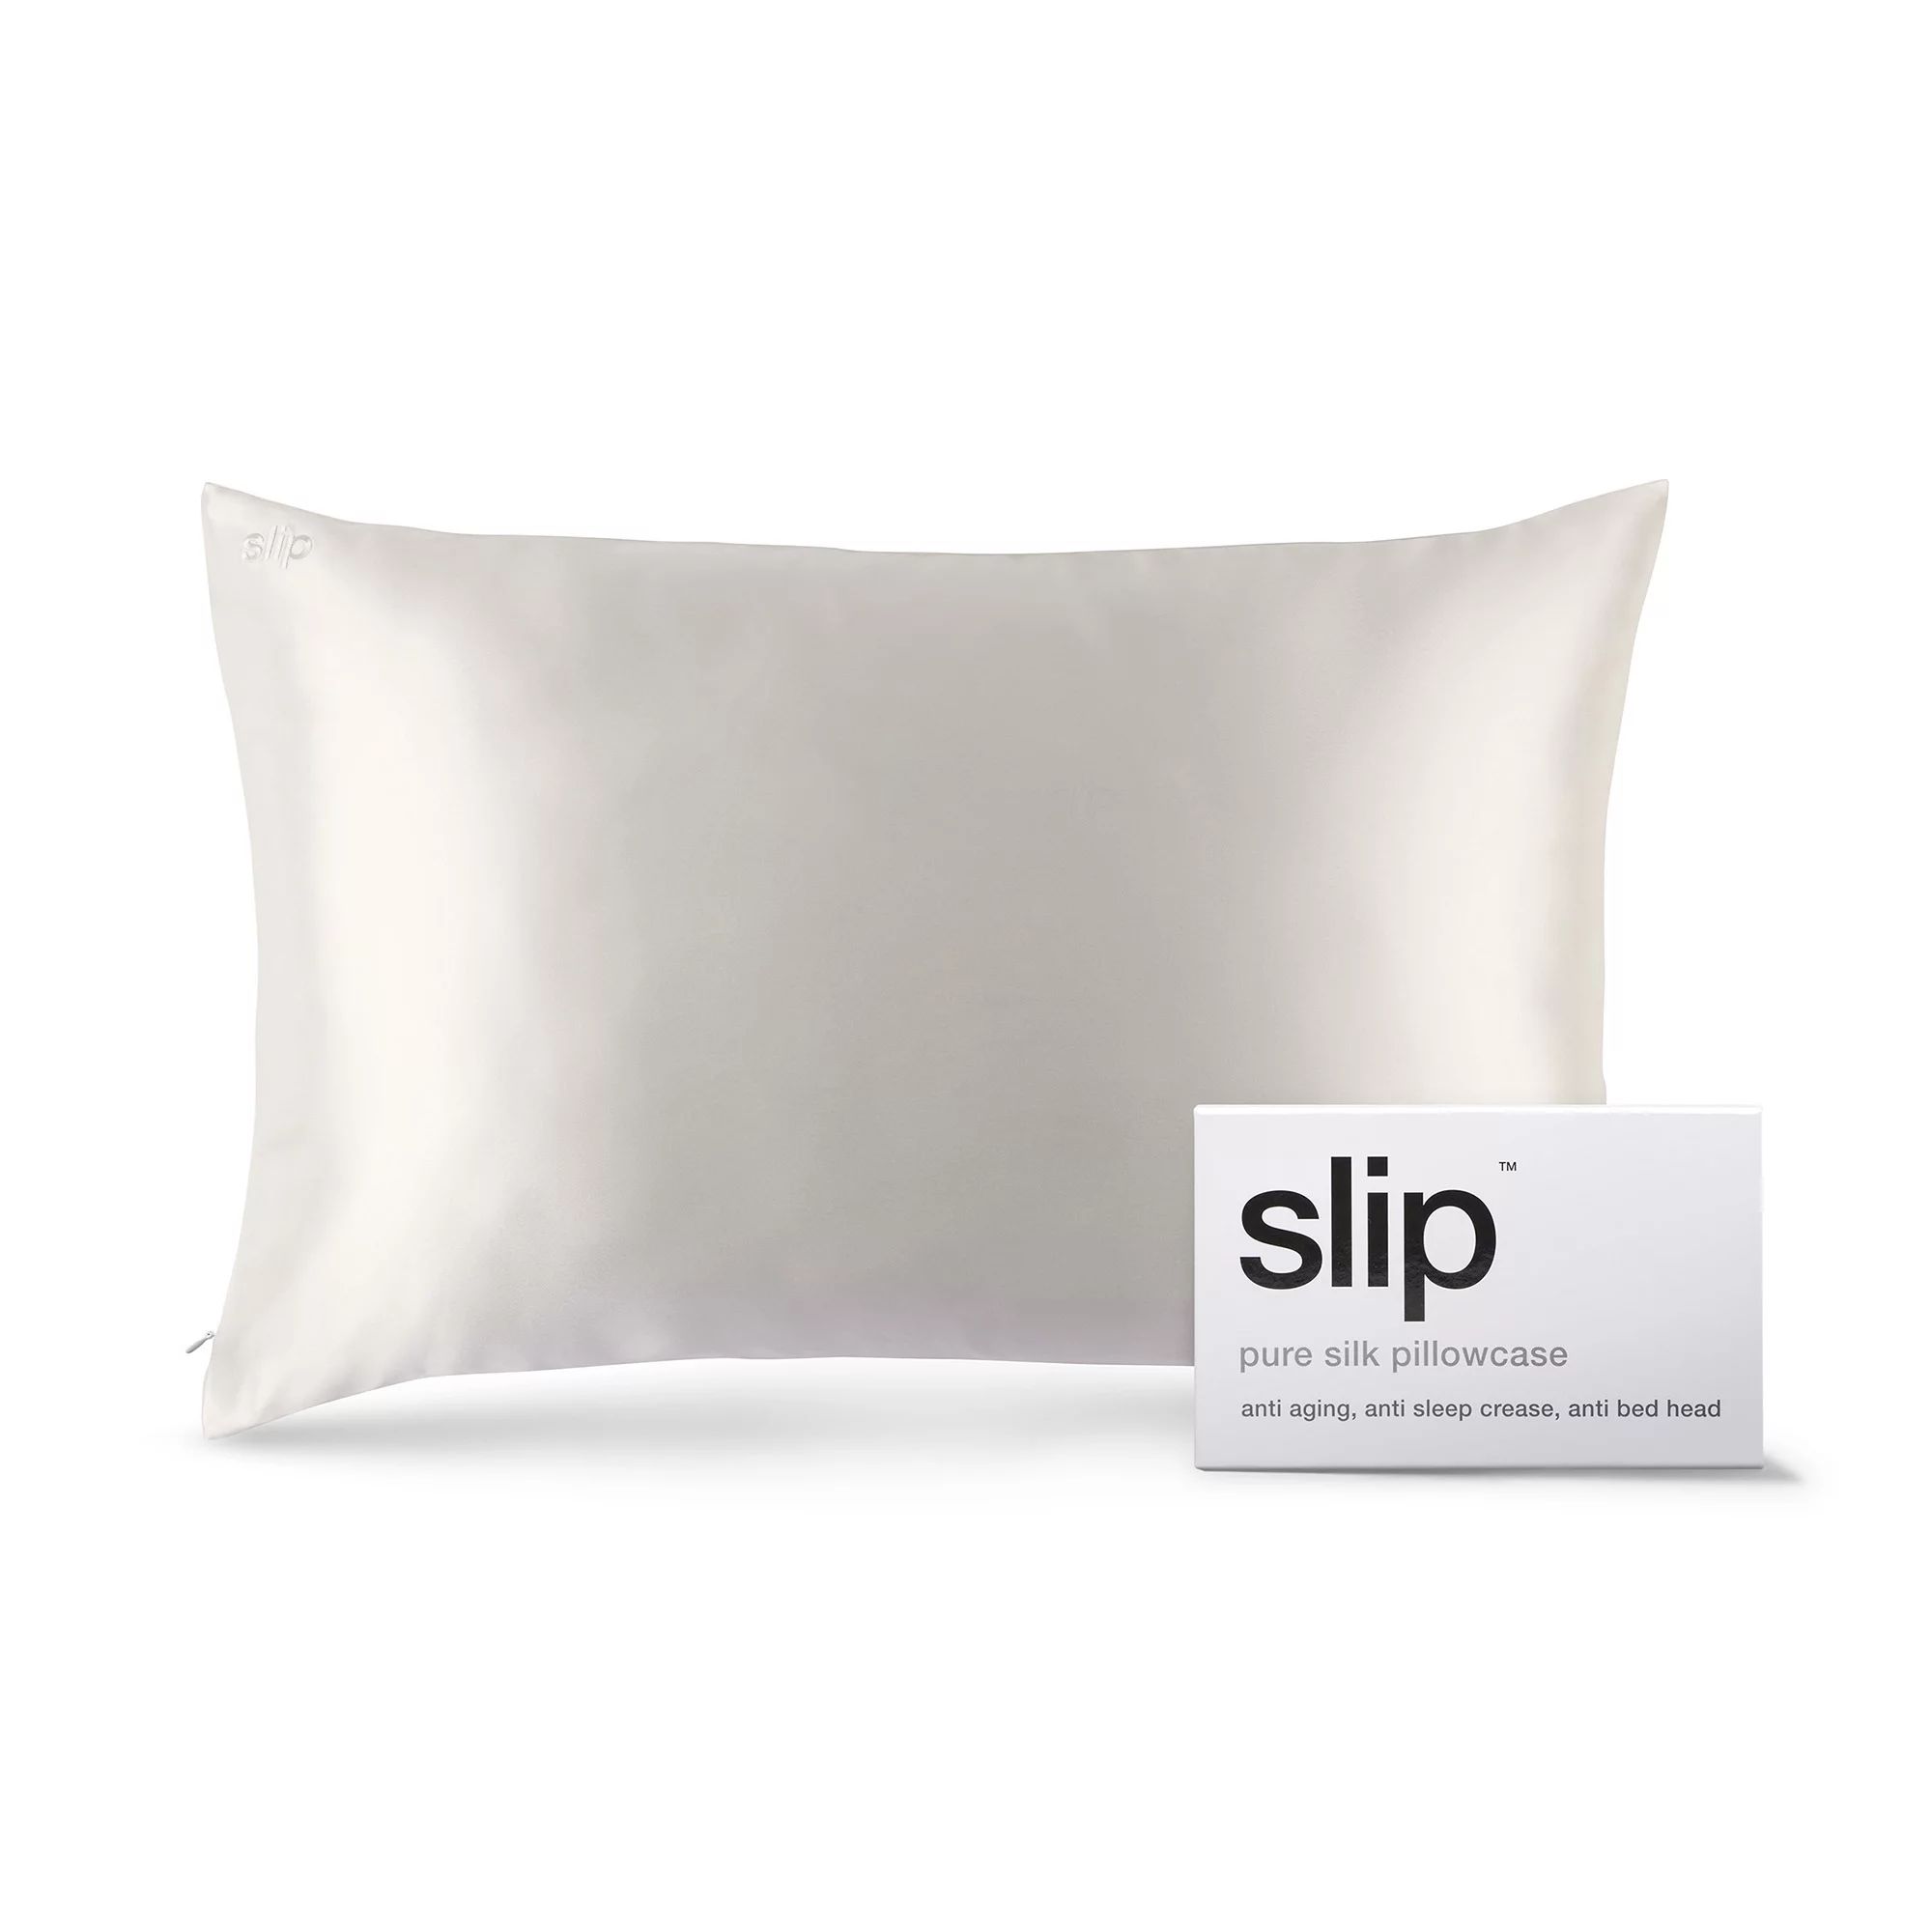 Slip Pure Silk Pillowcase Bedding, White, Queen - Walmart.com | Walmart (US)